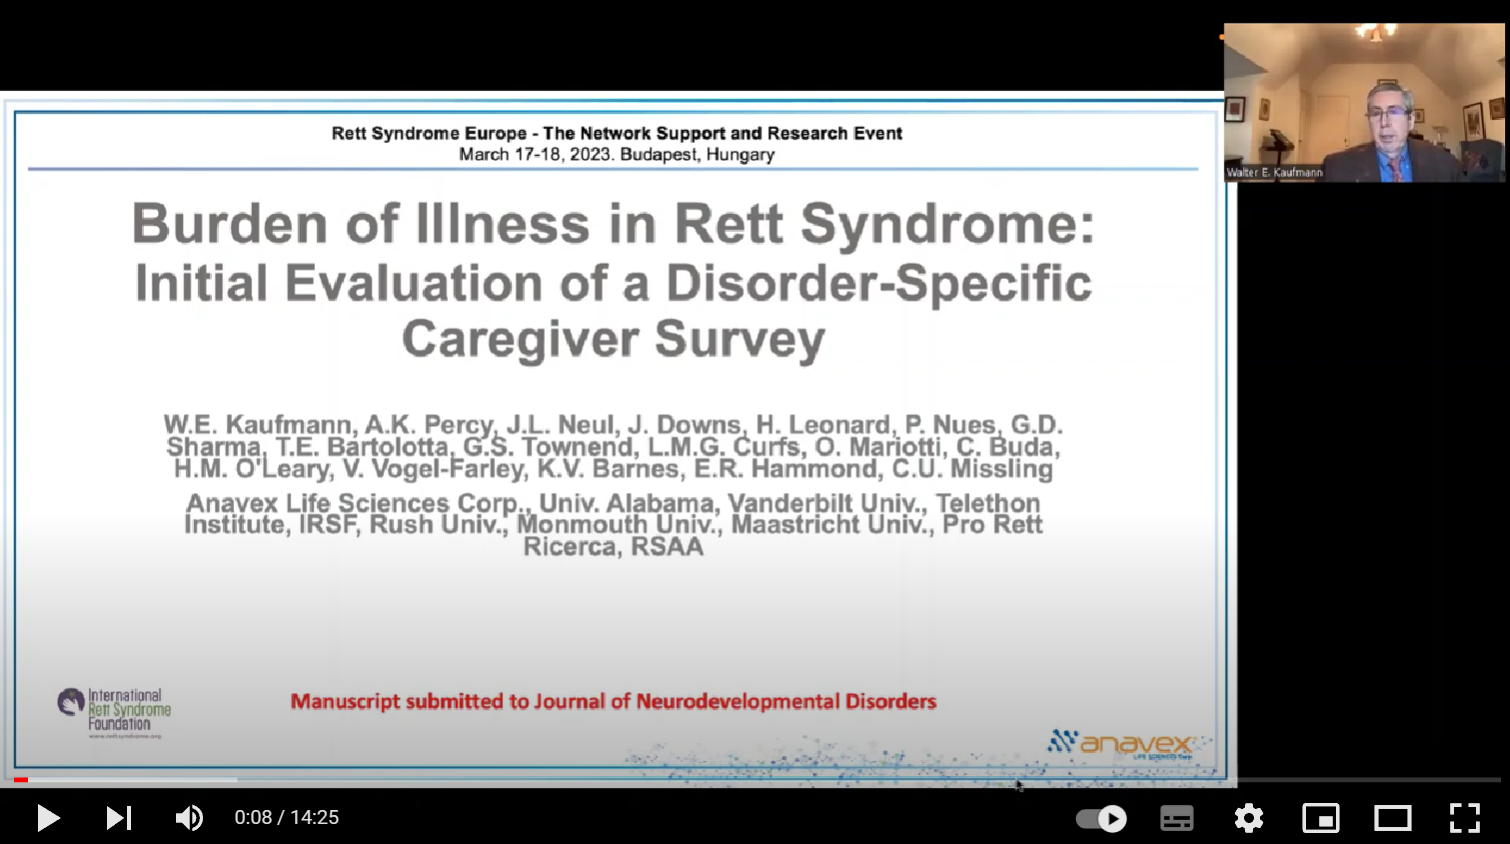 The Burden of Illness Study in Rett Syndrome